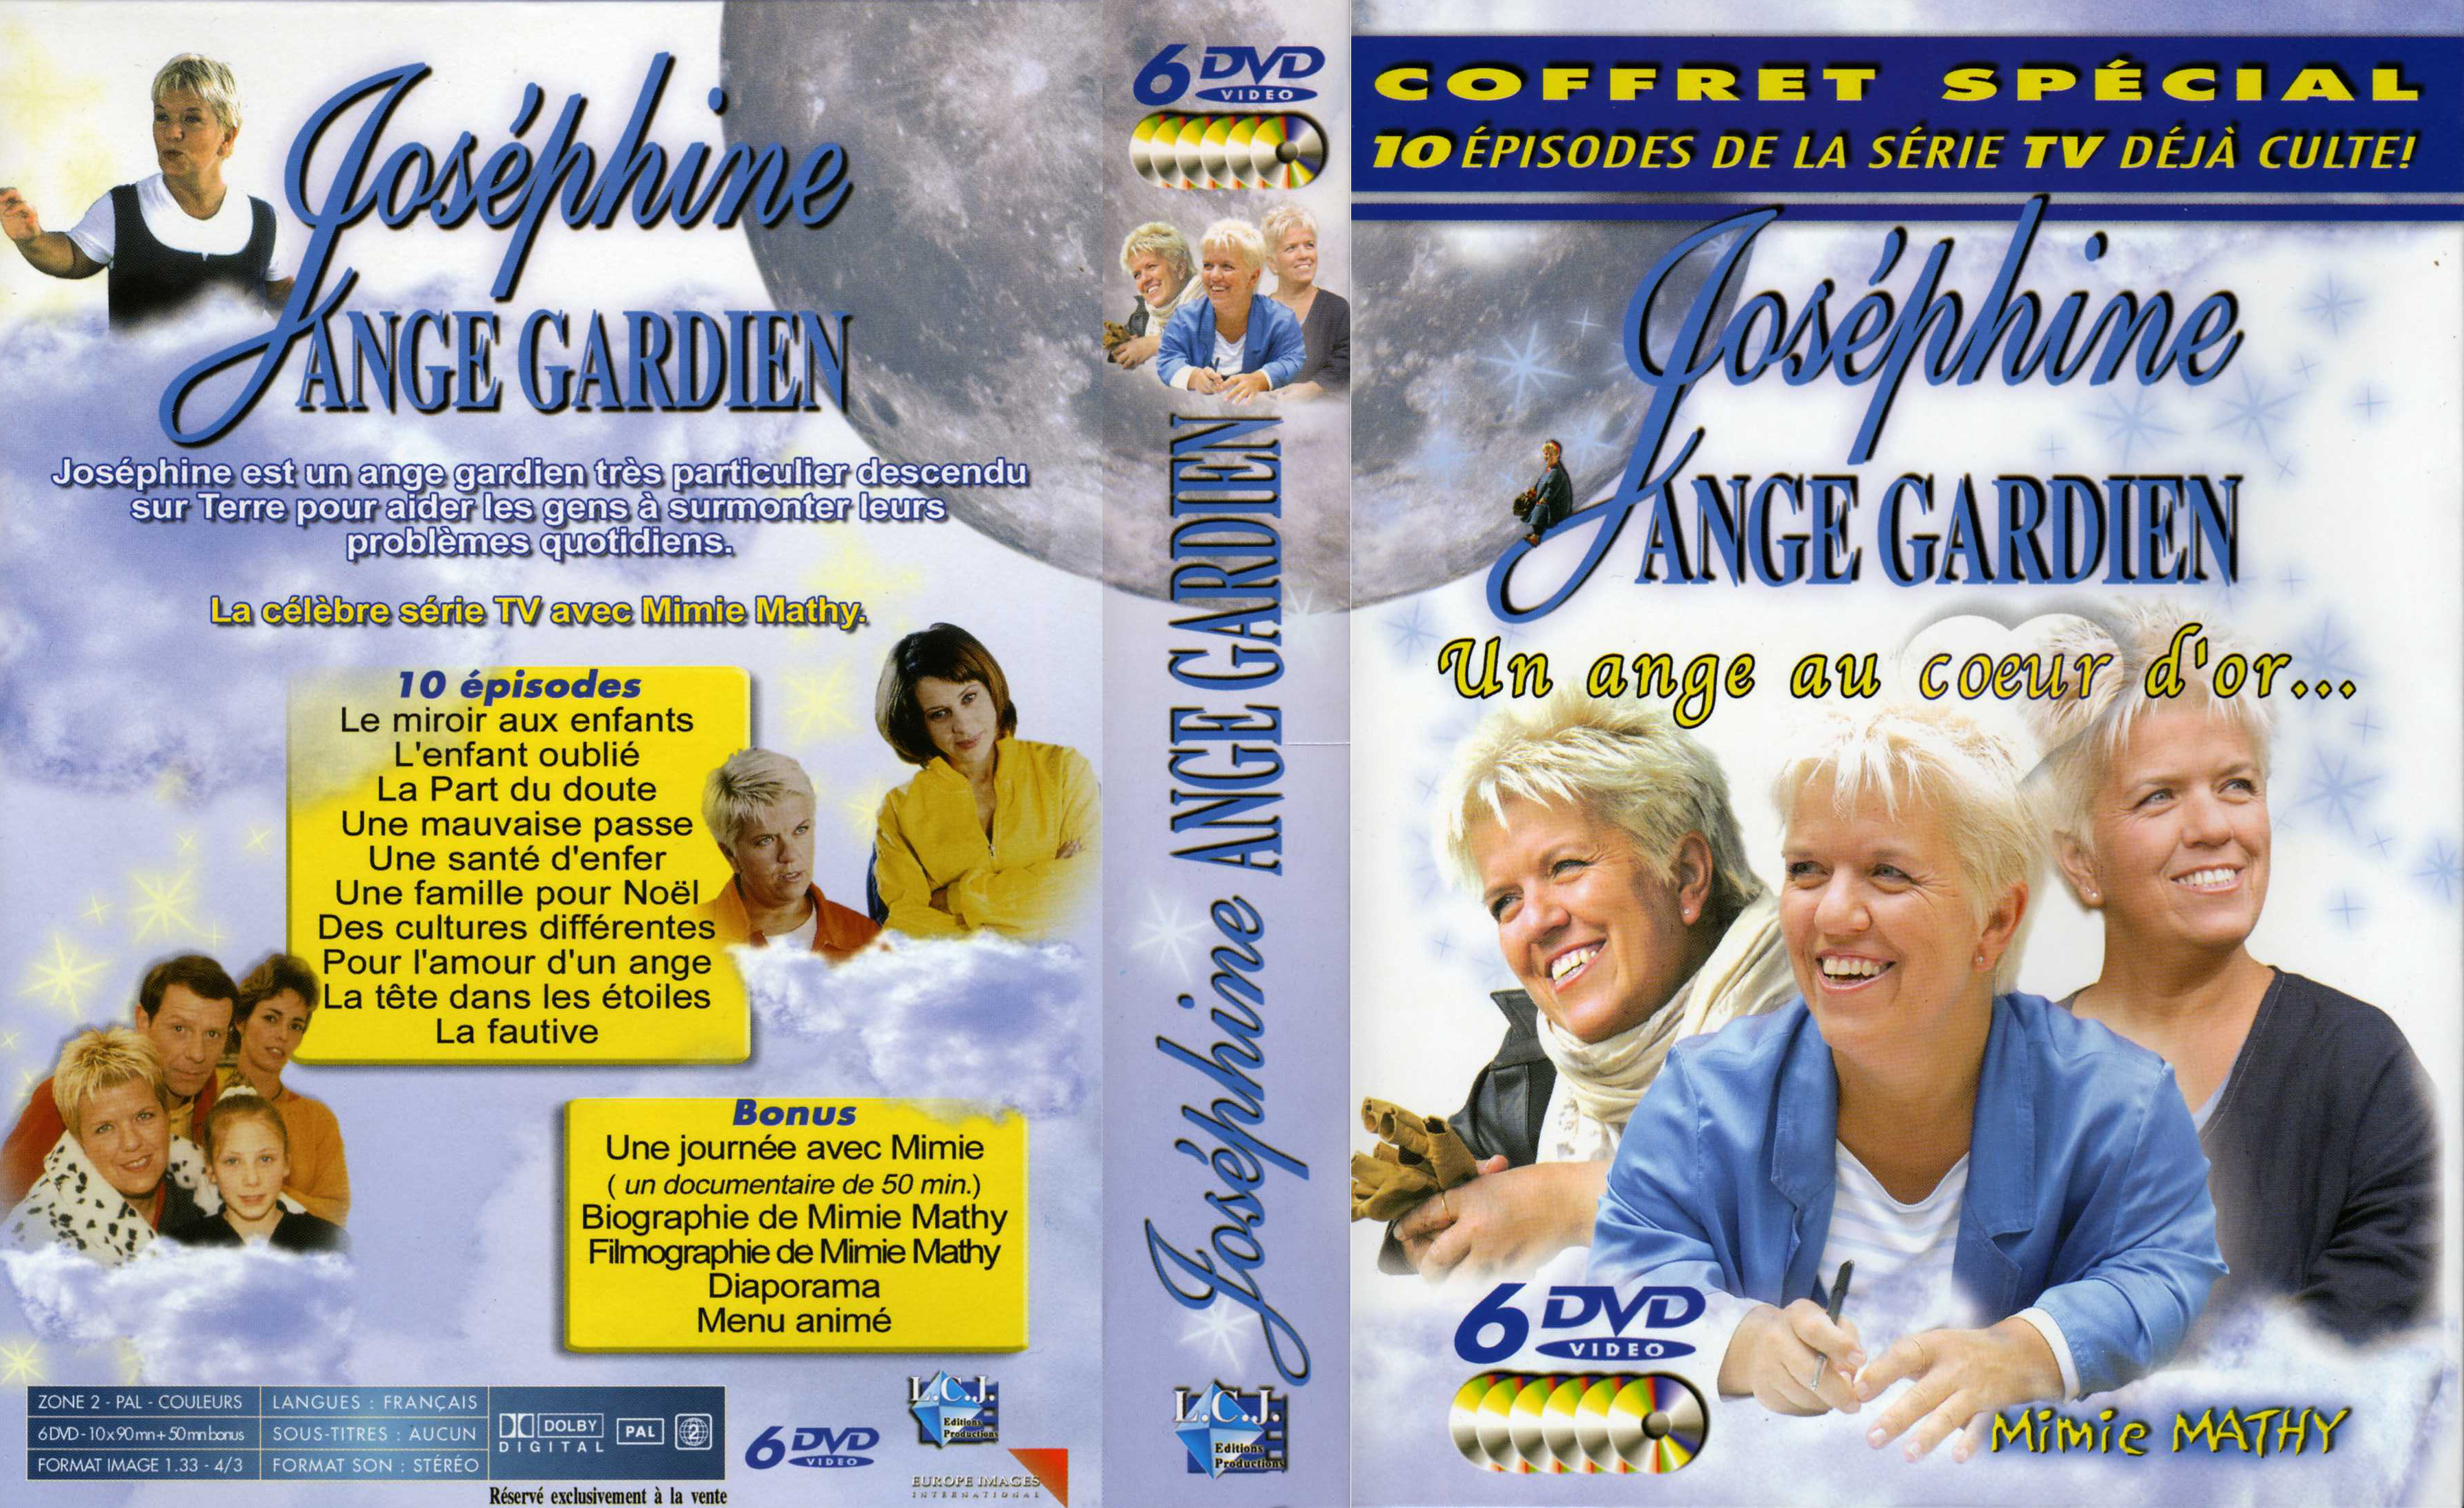 Jaquette DVD Josphine ange gardien COFFRET vol 1